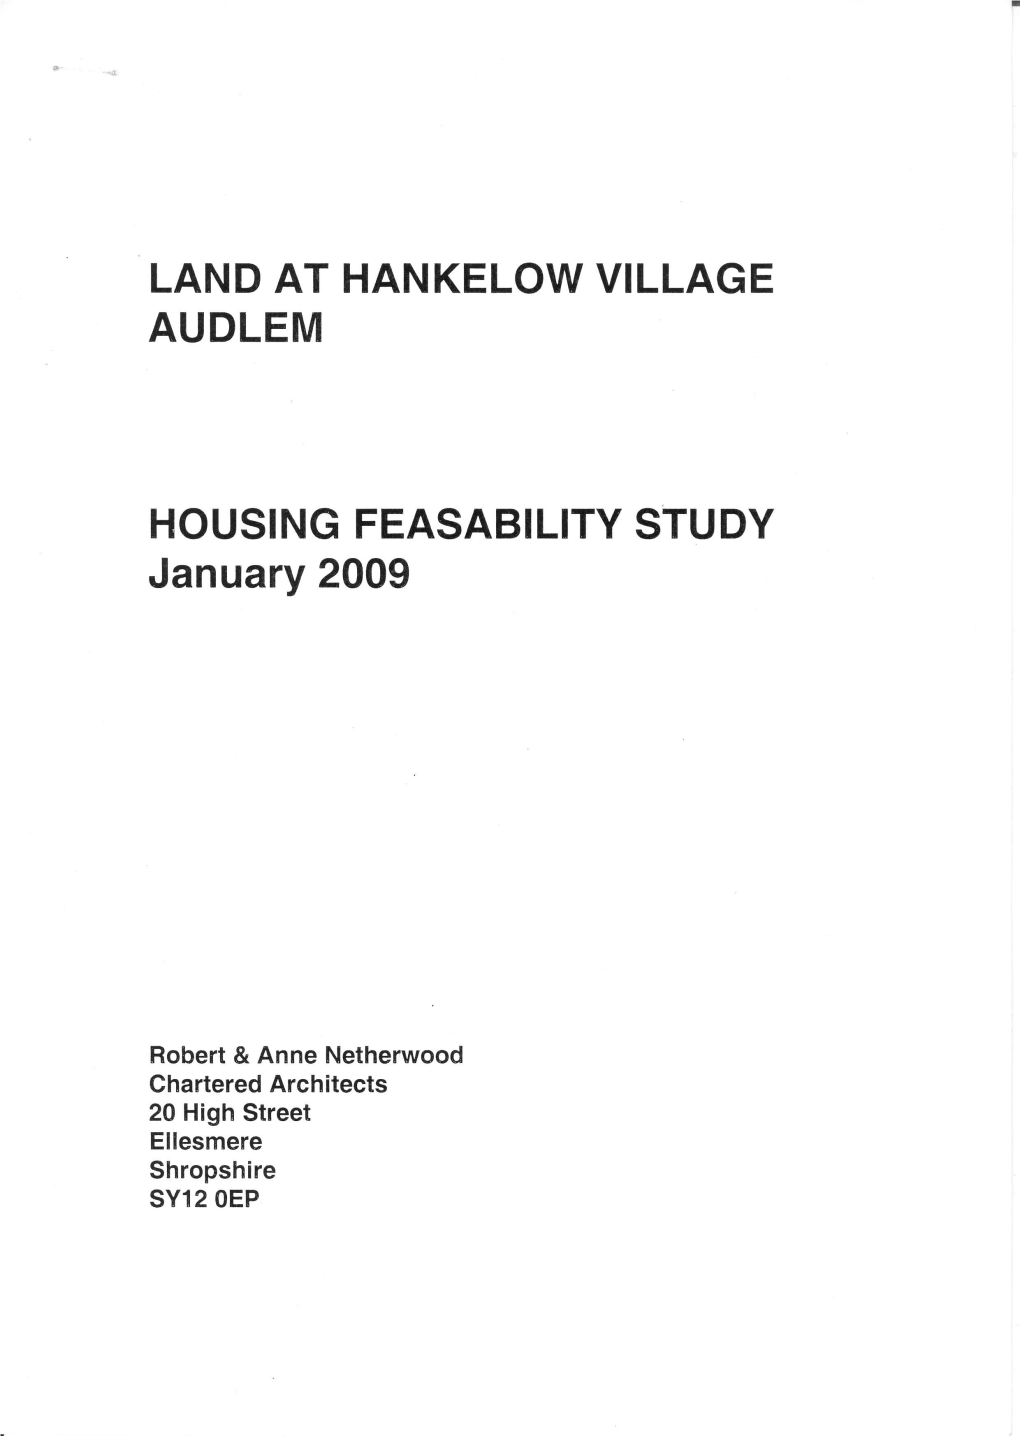 Land at Hankelow Village Audlem Housing Feasability